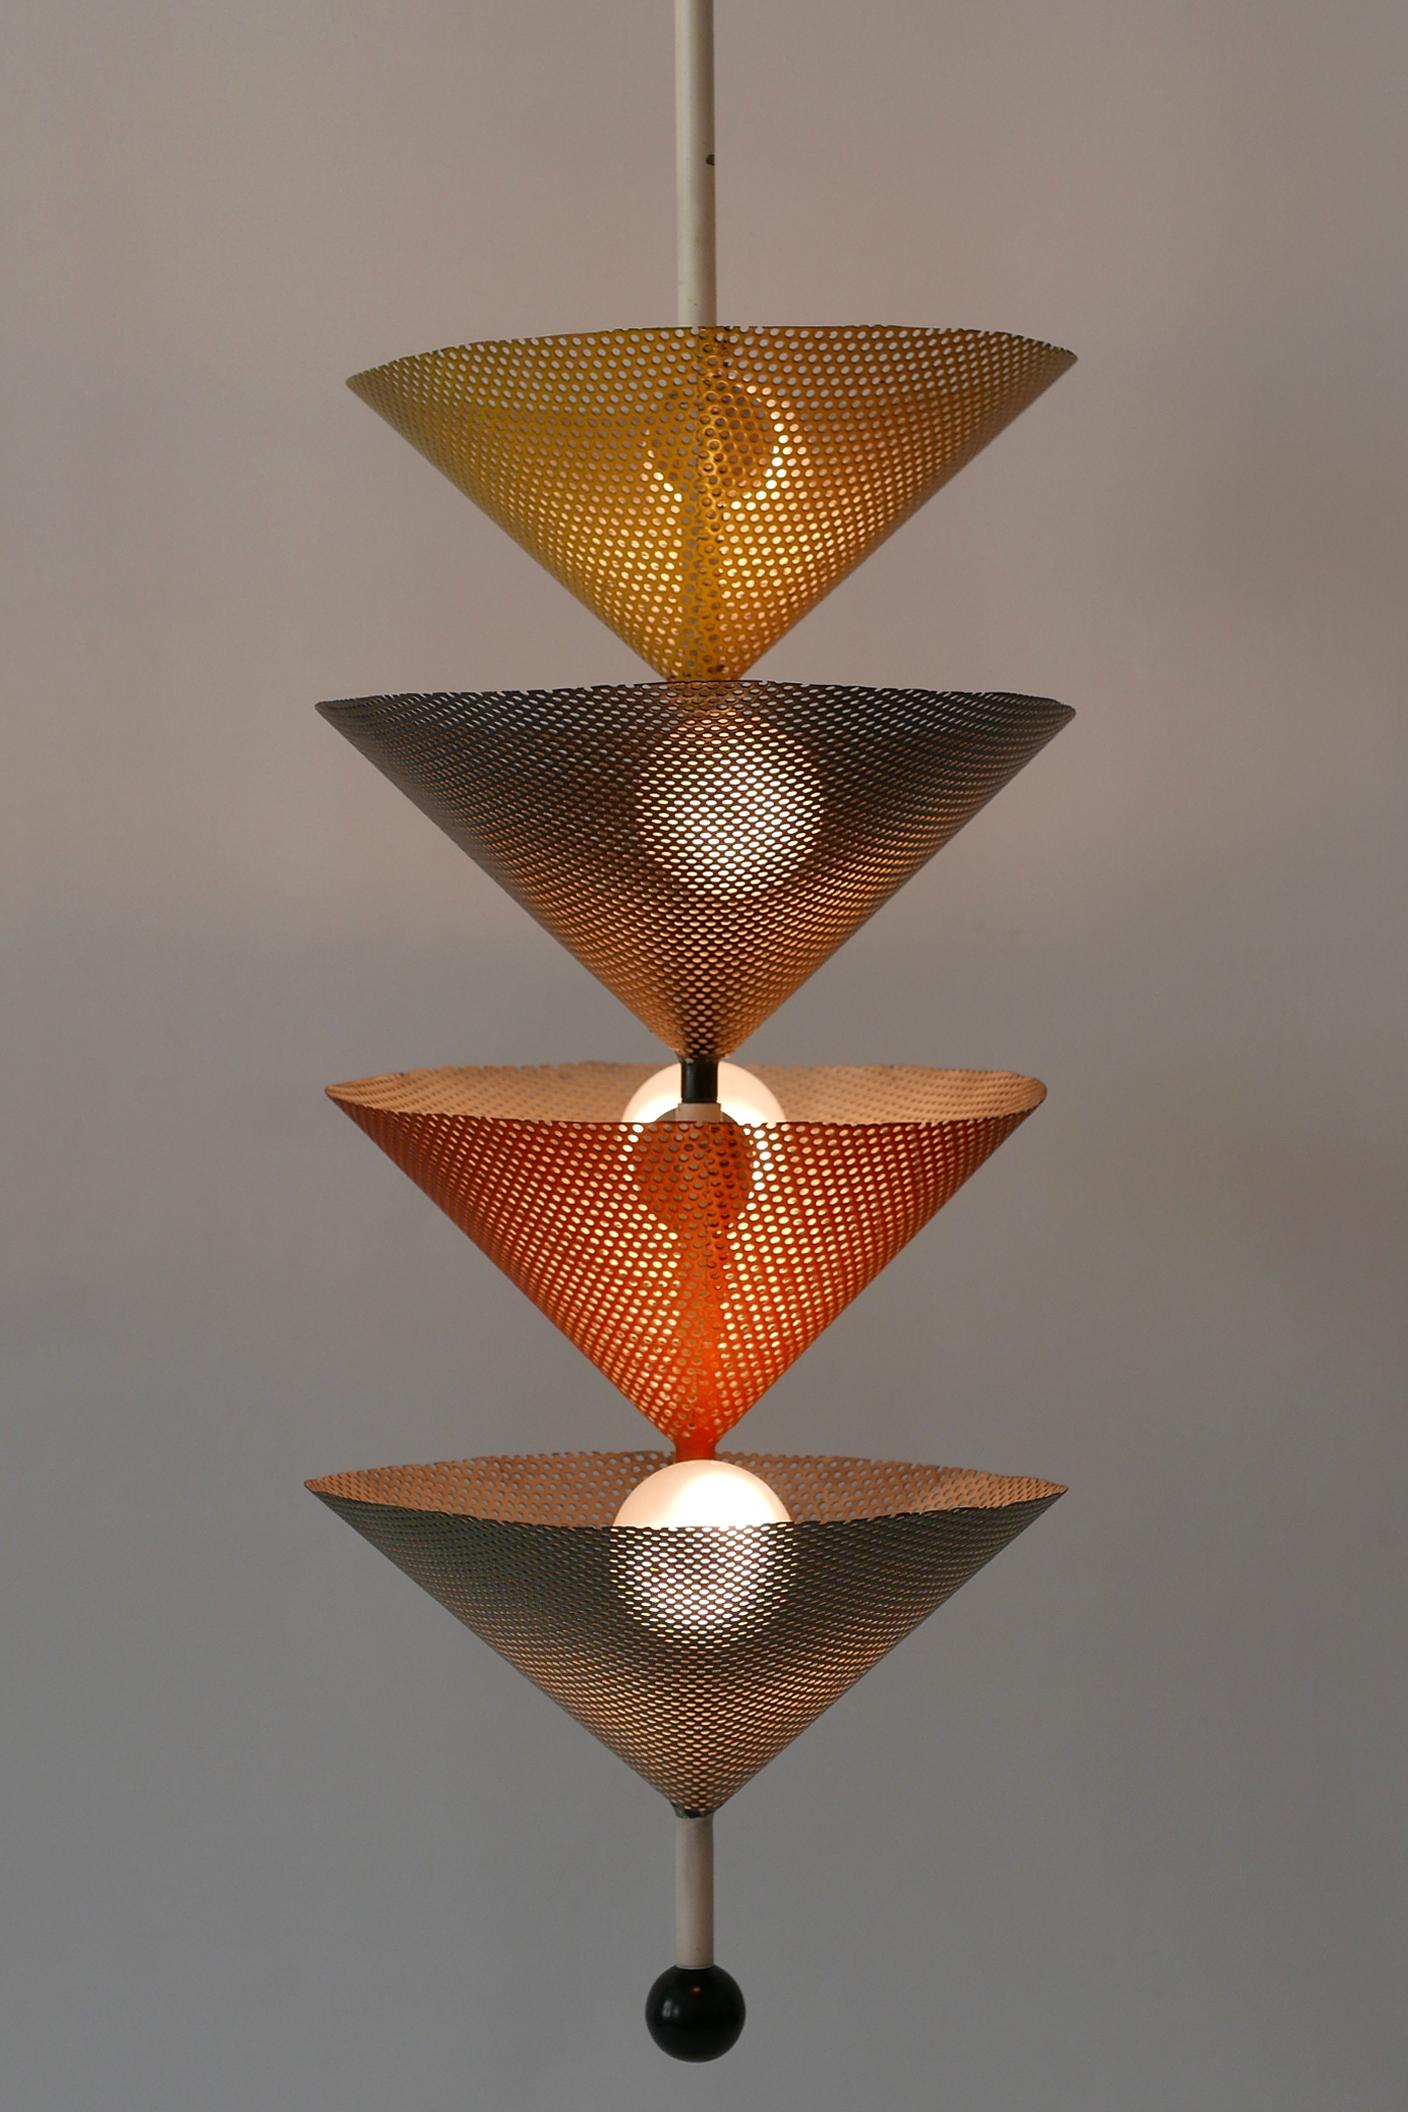 Rare Mid-Century Modern Chandelier or Pendant Lamp by Mathieu Matégot 1950s For Sale 7